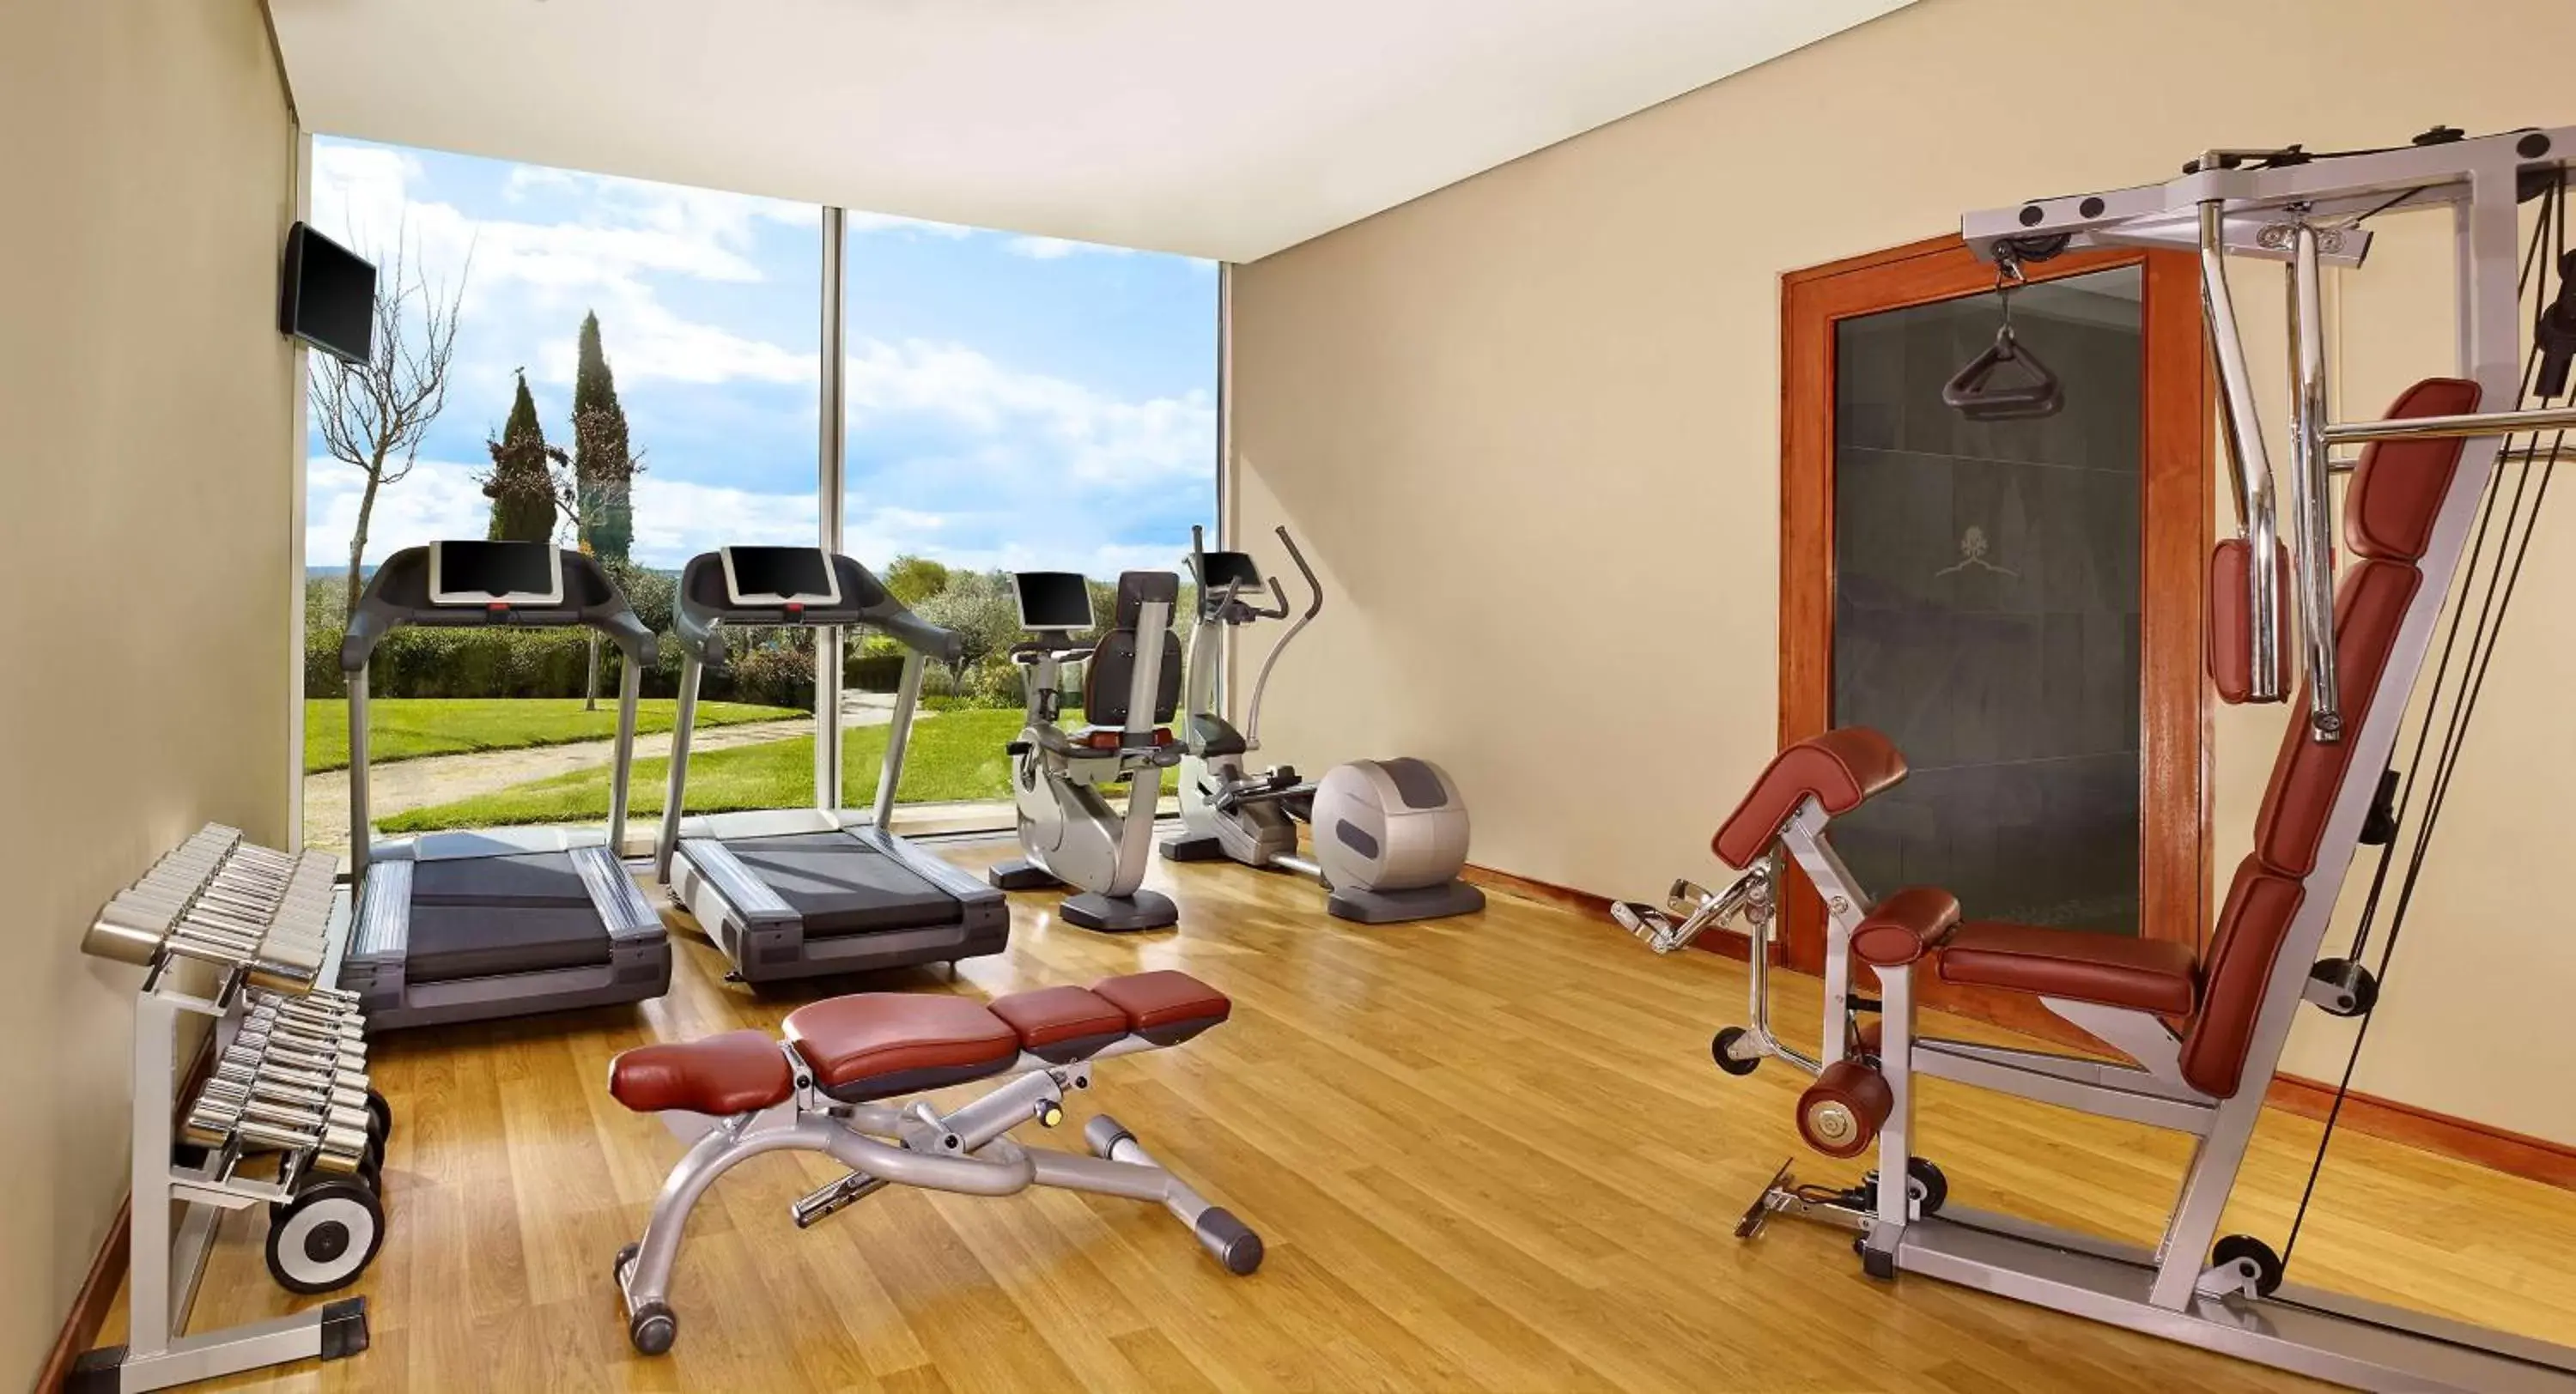 Fitness centre/facilities, Fitness Center/Facilities in Convento do Espinheiro, Historic Hotel & Spa